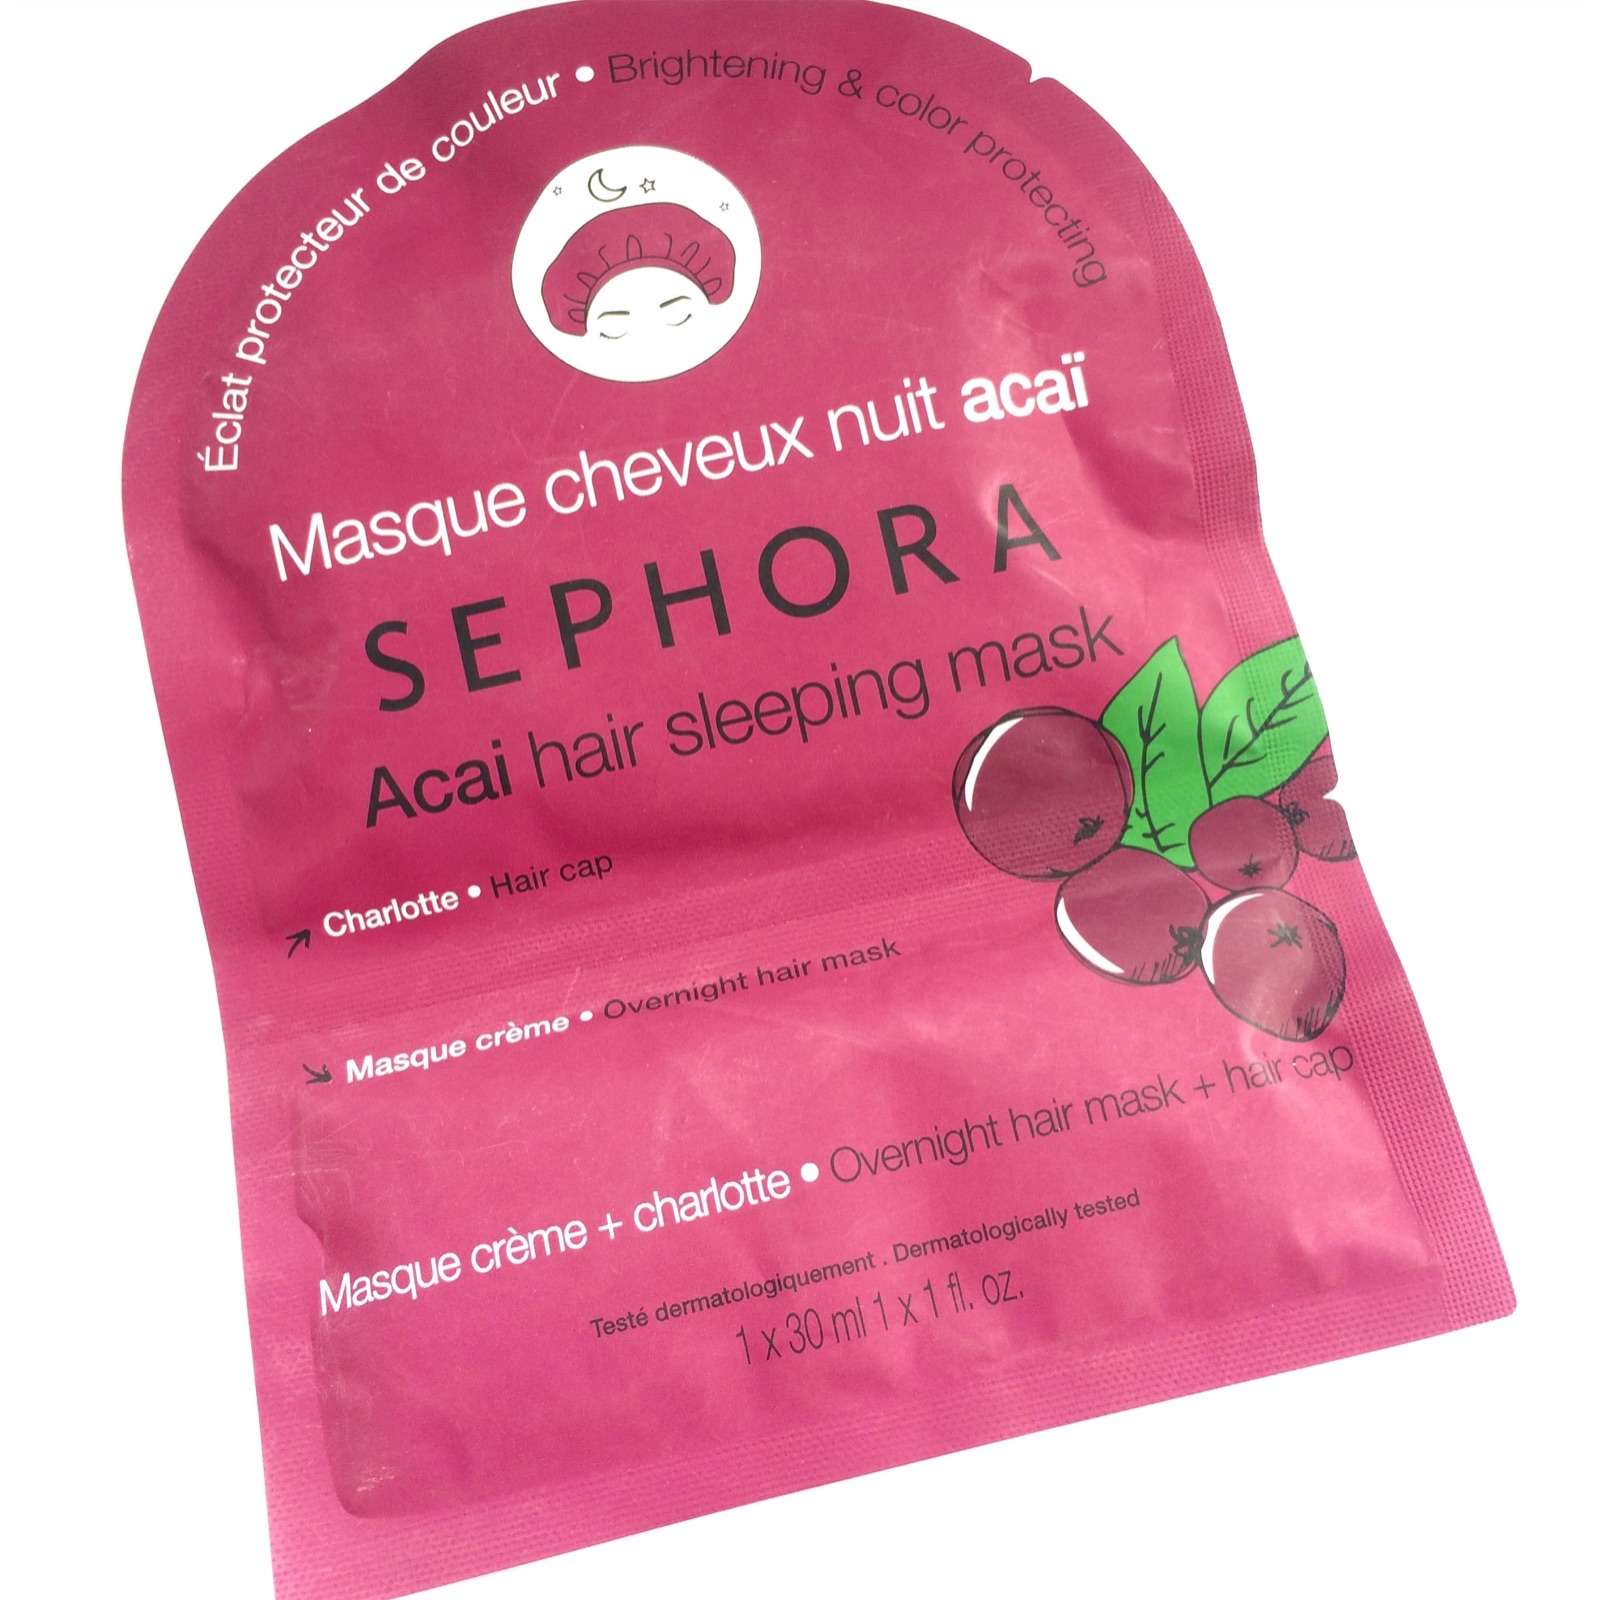 Sephora Acai Hair Sleeping Mask Review